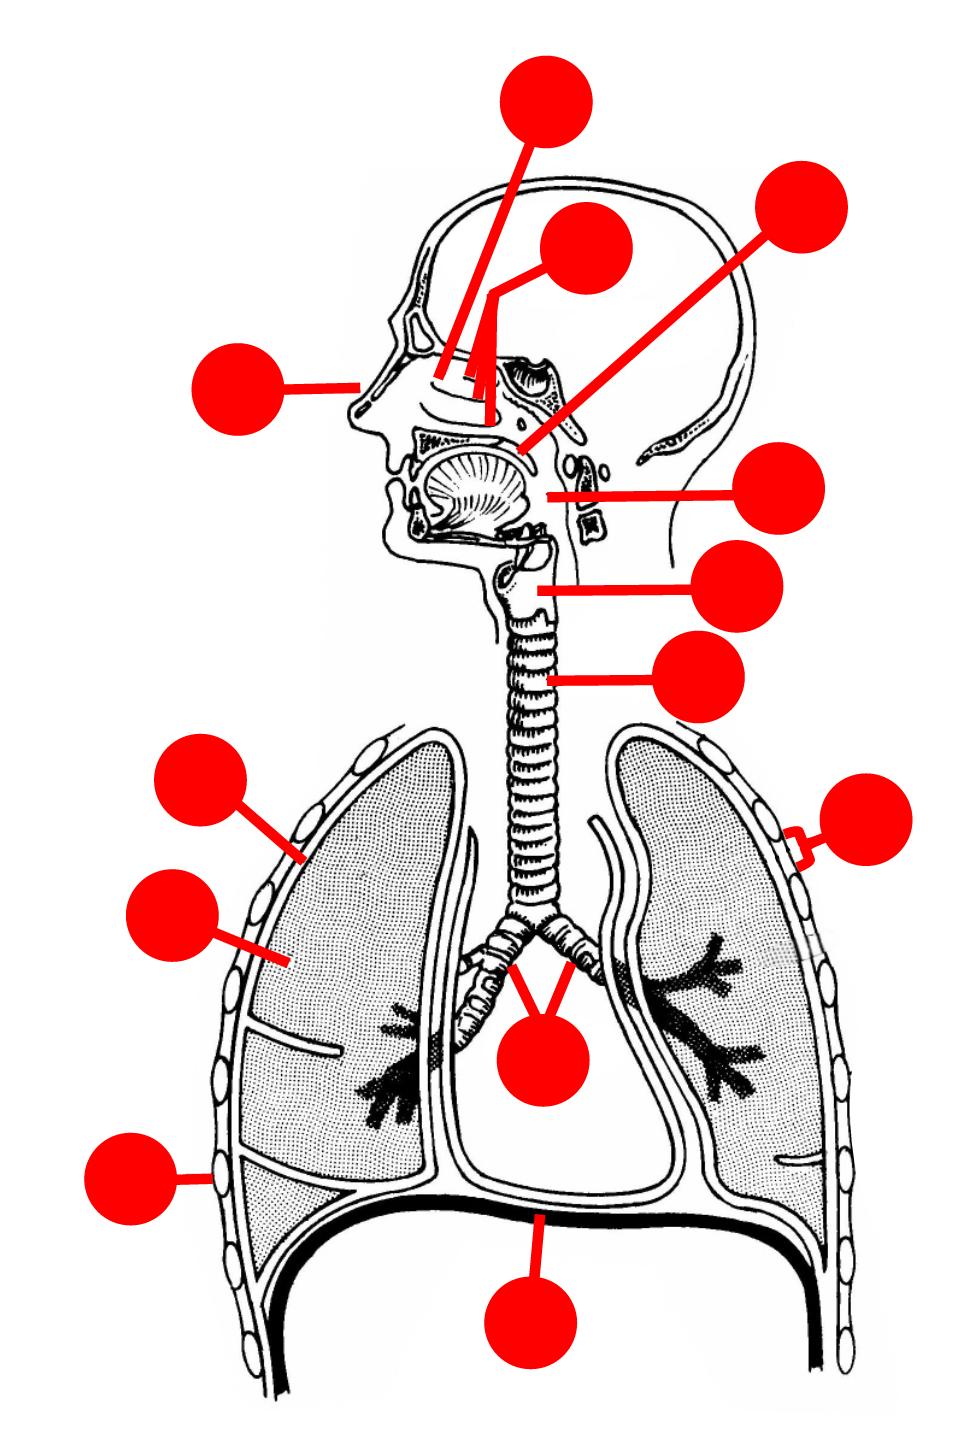 Images 07. Respiratory System and Breathing | Basic Human Anatomy